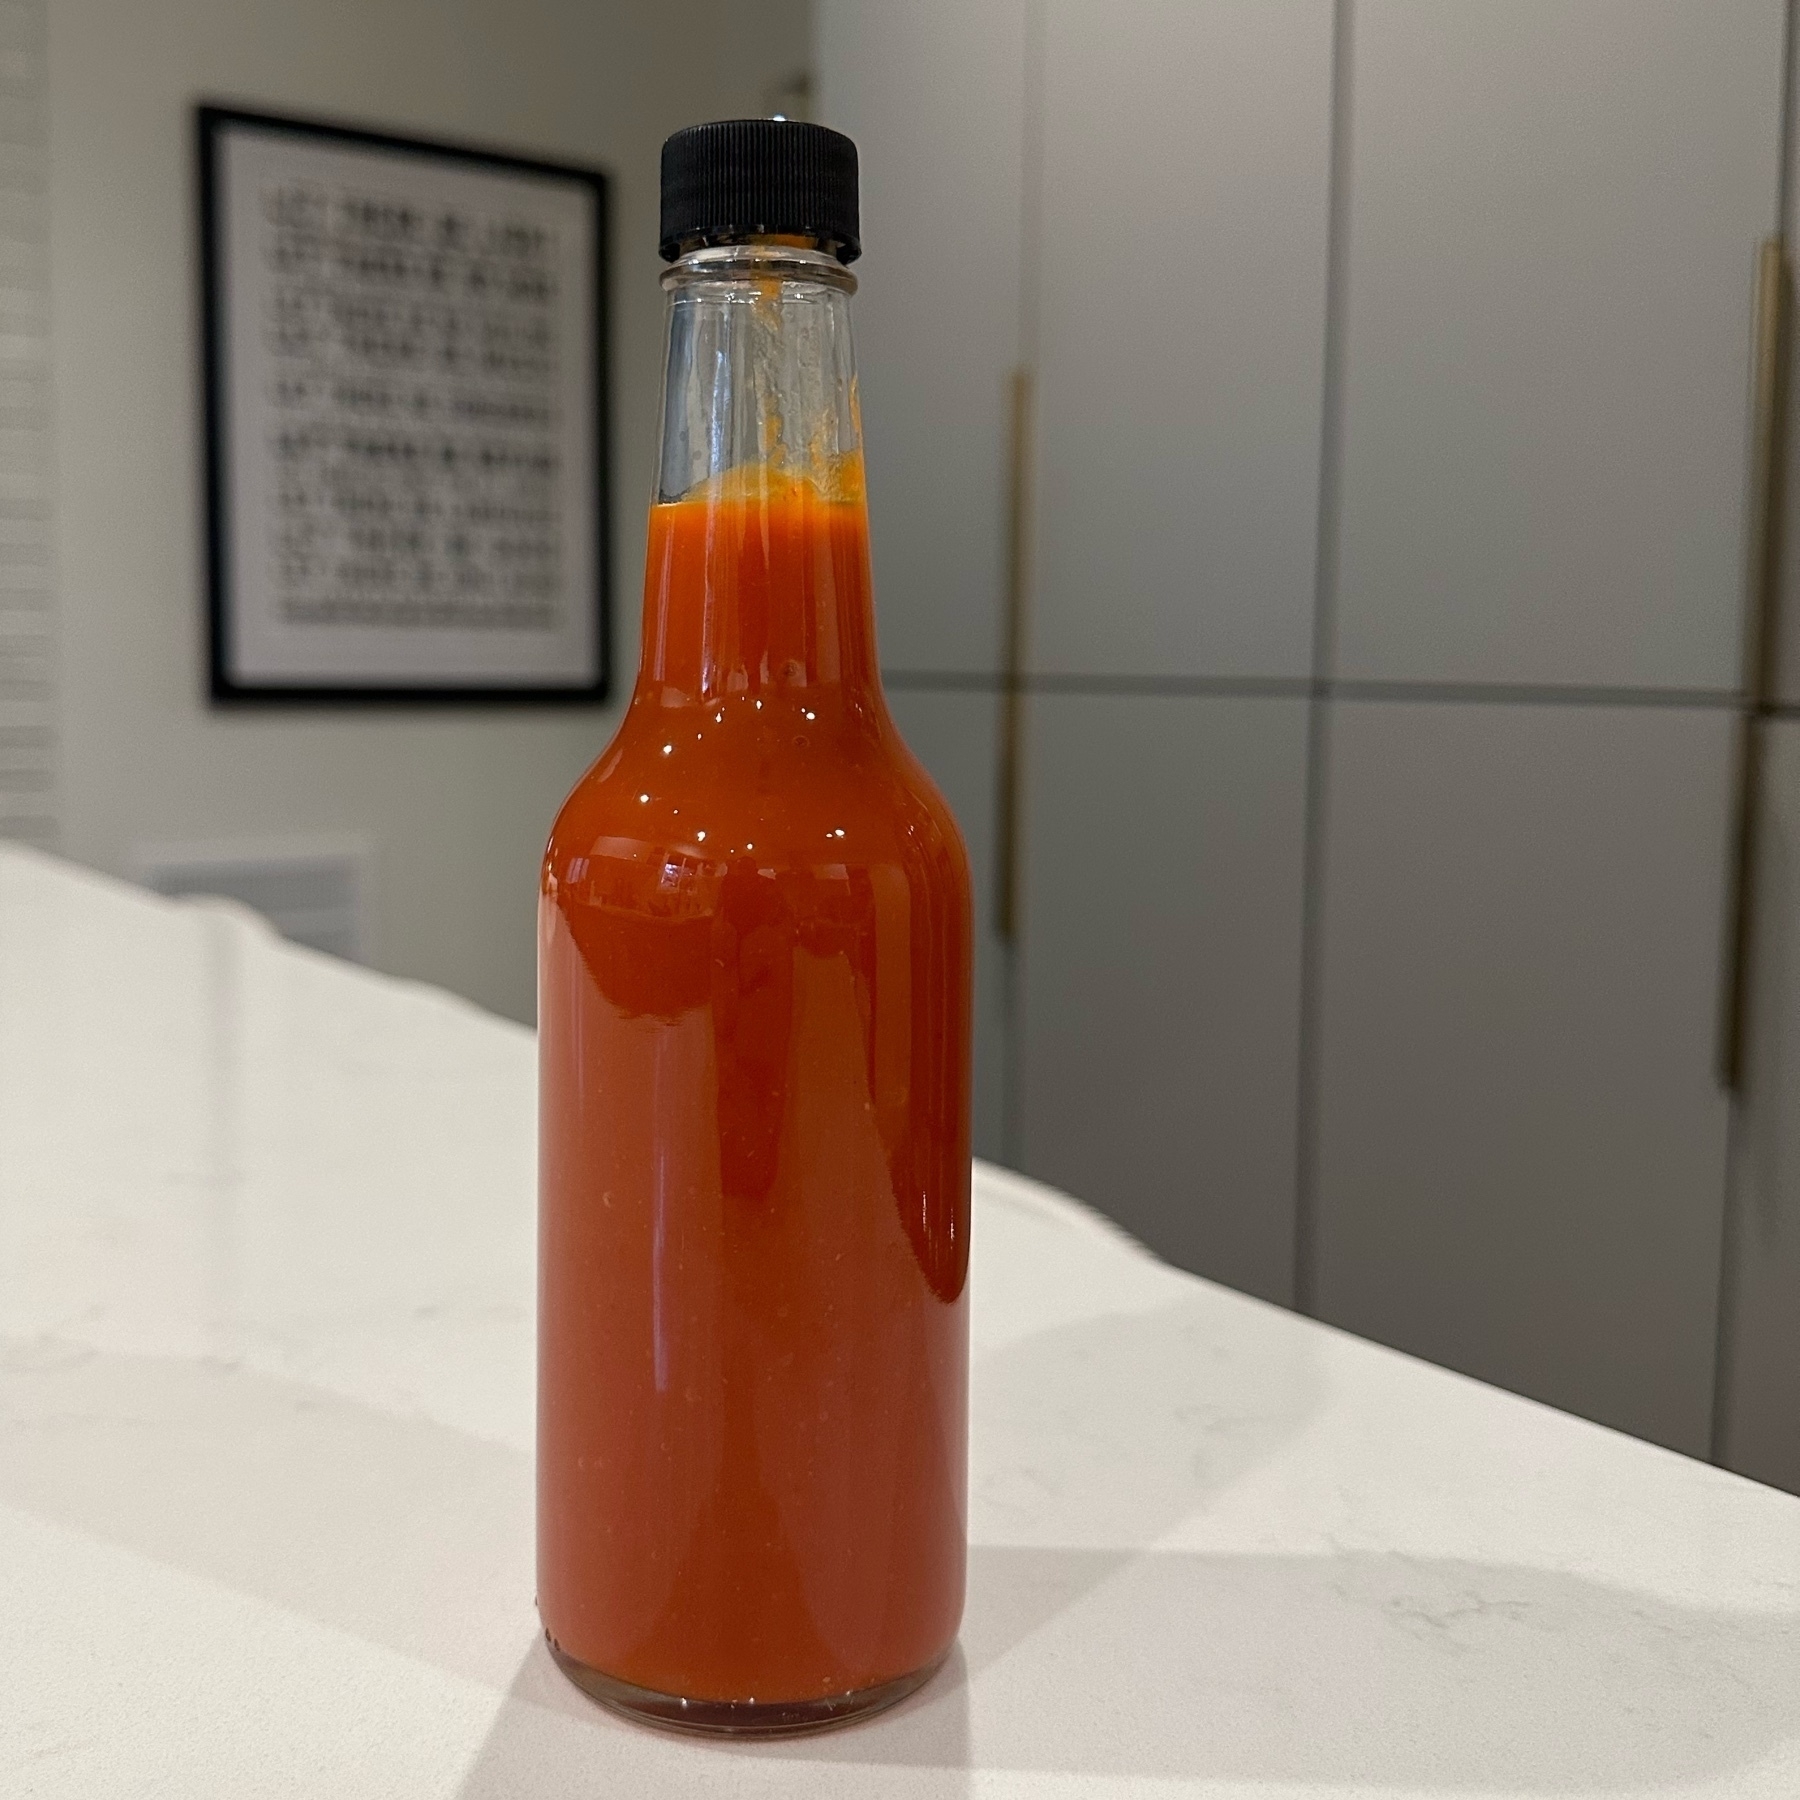 bottle of hot sauce